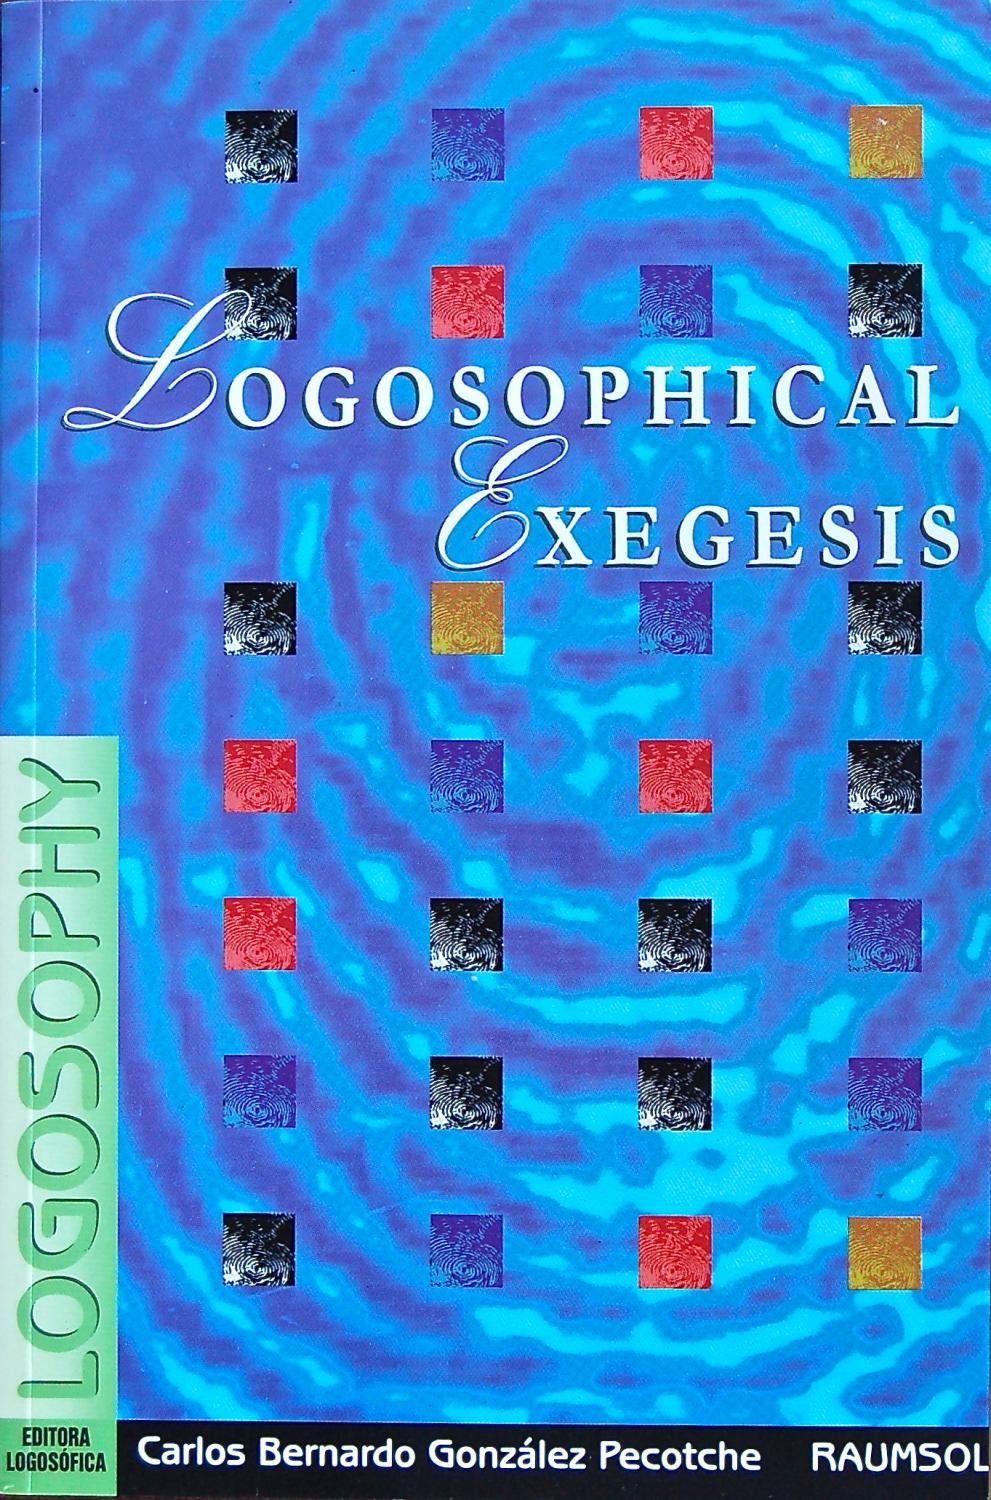 Logosophical Exegesis - Carlos Bernardo Gonzalez Pecotche [Raumsol]